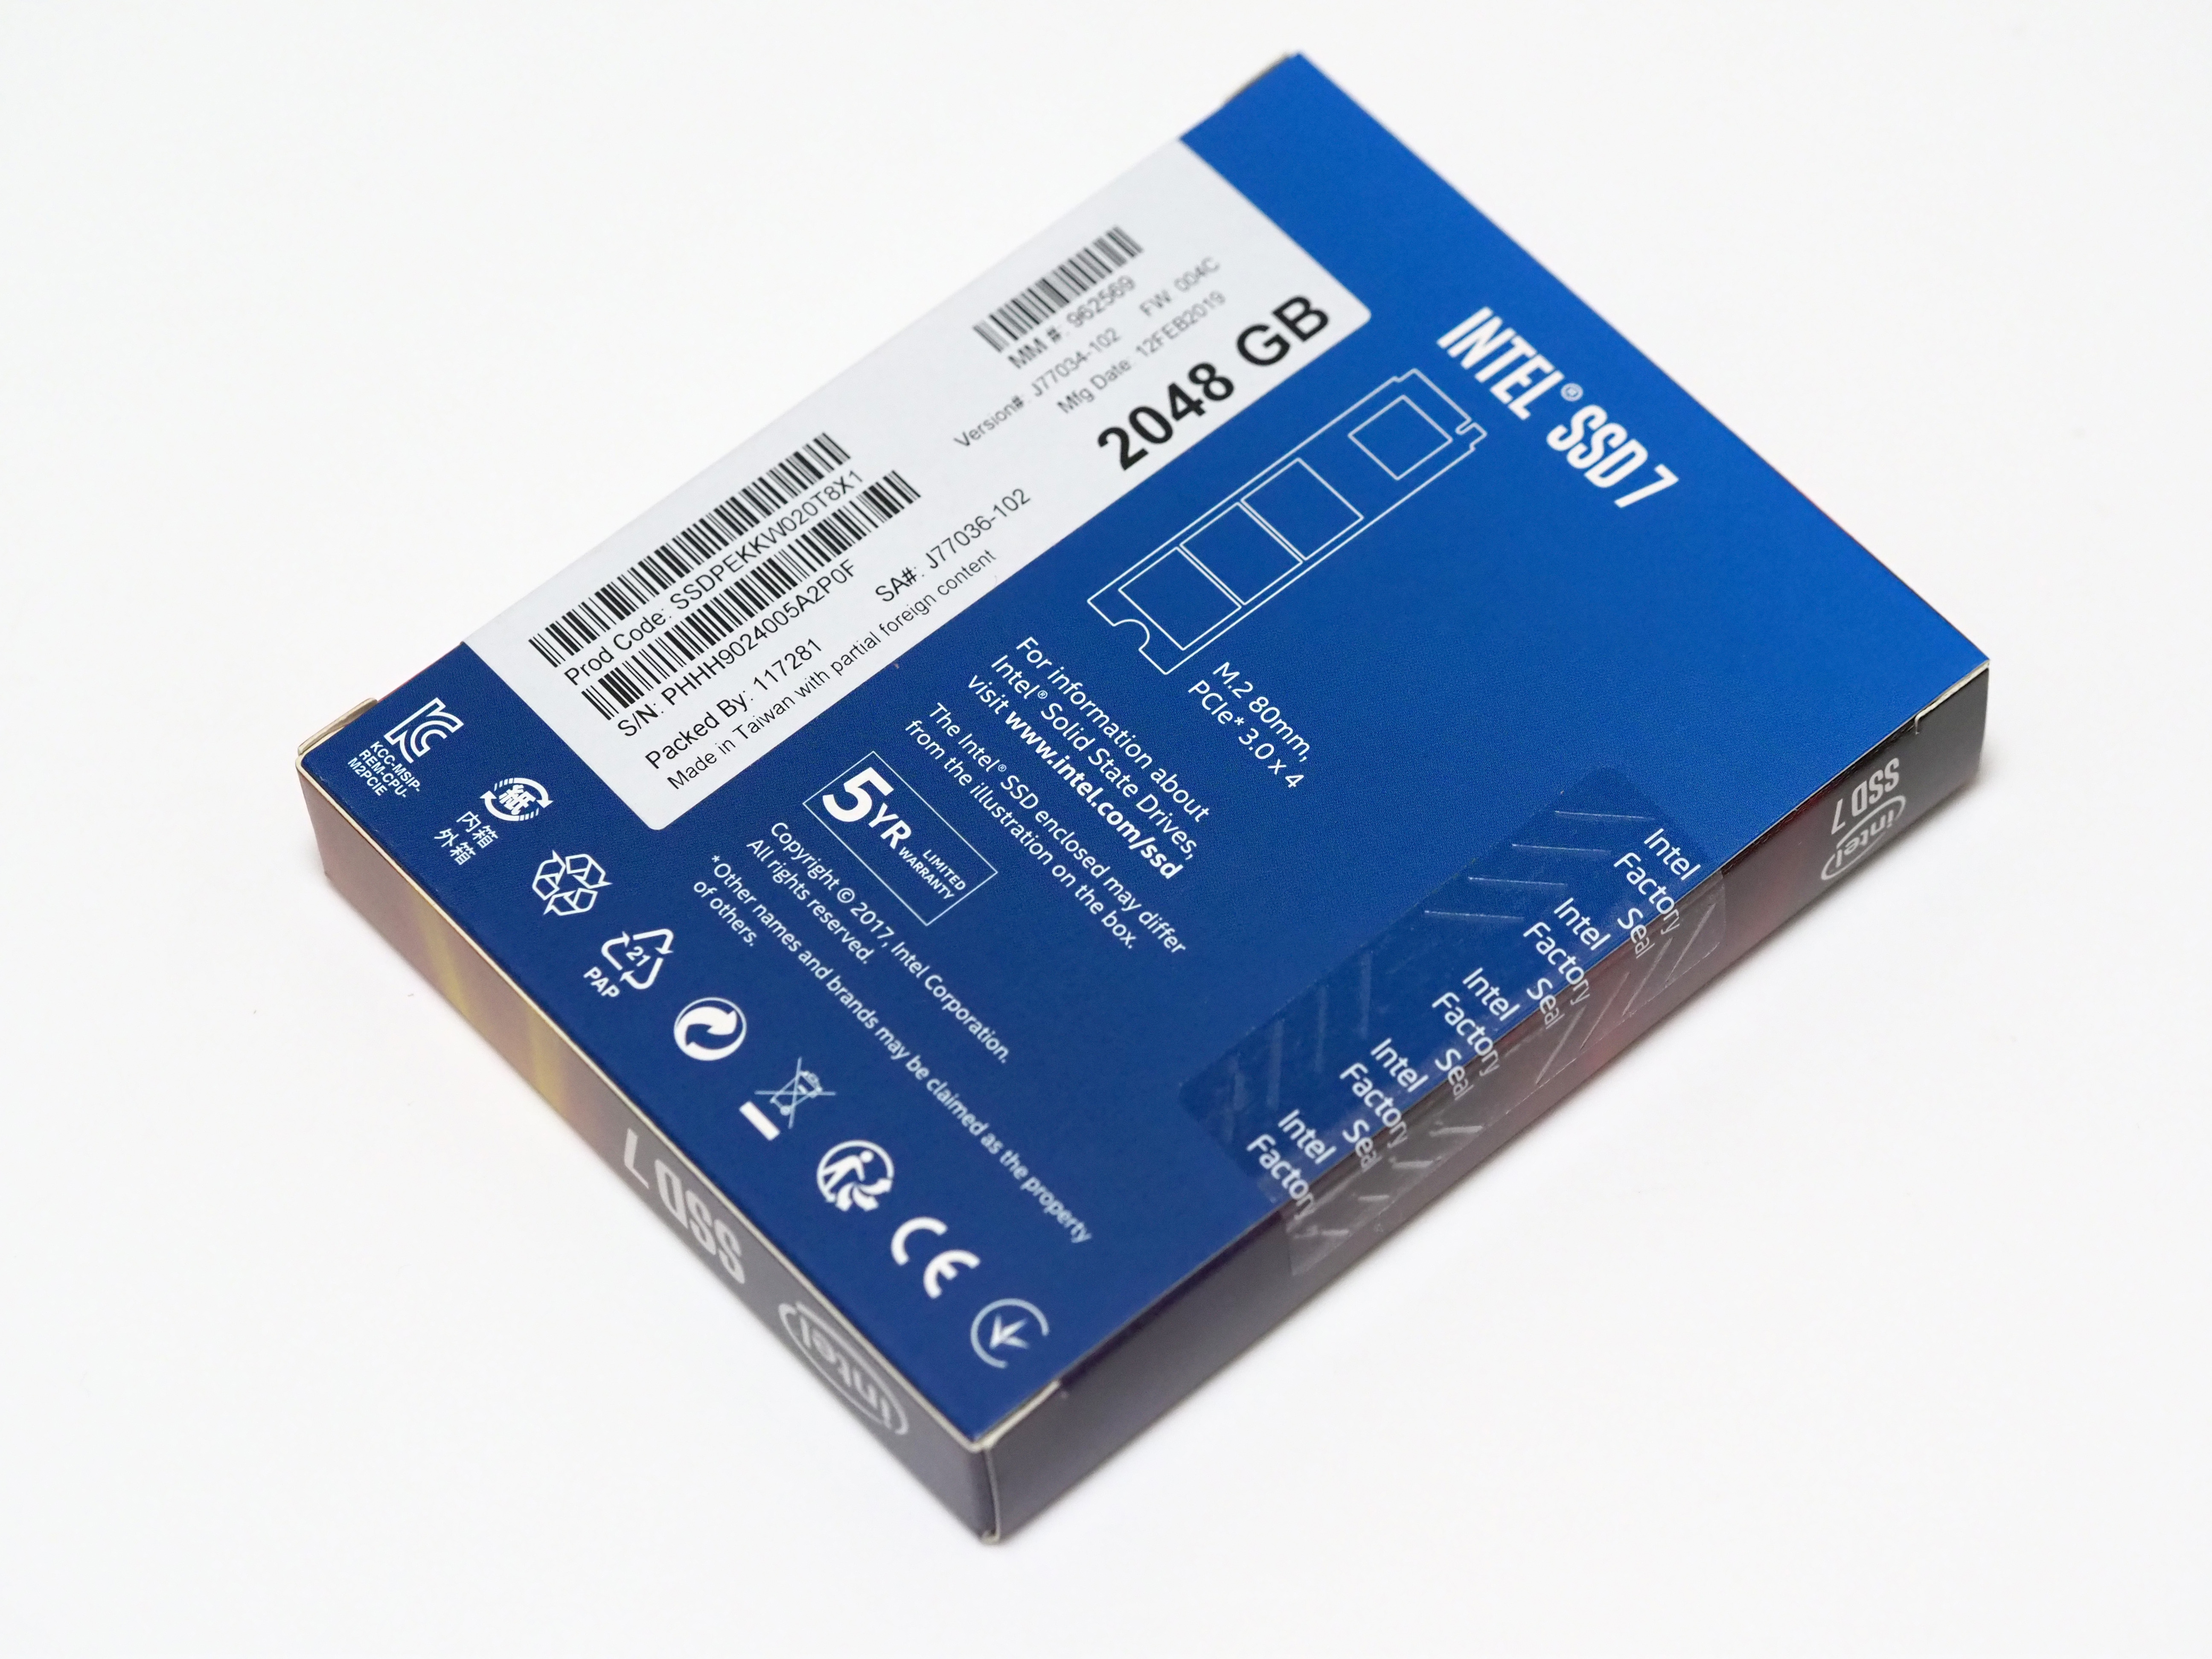 Intel SSD 760p M.2 PCIEx4 2TBモデル SSDPEKKW020T8X1 のレビュー - 読み書きの速度と性能